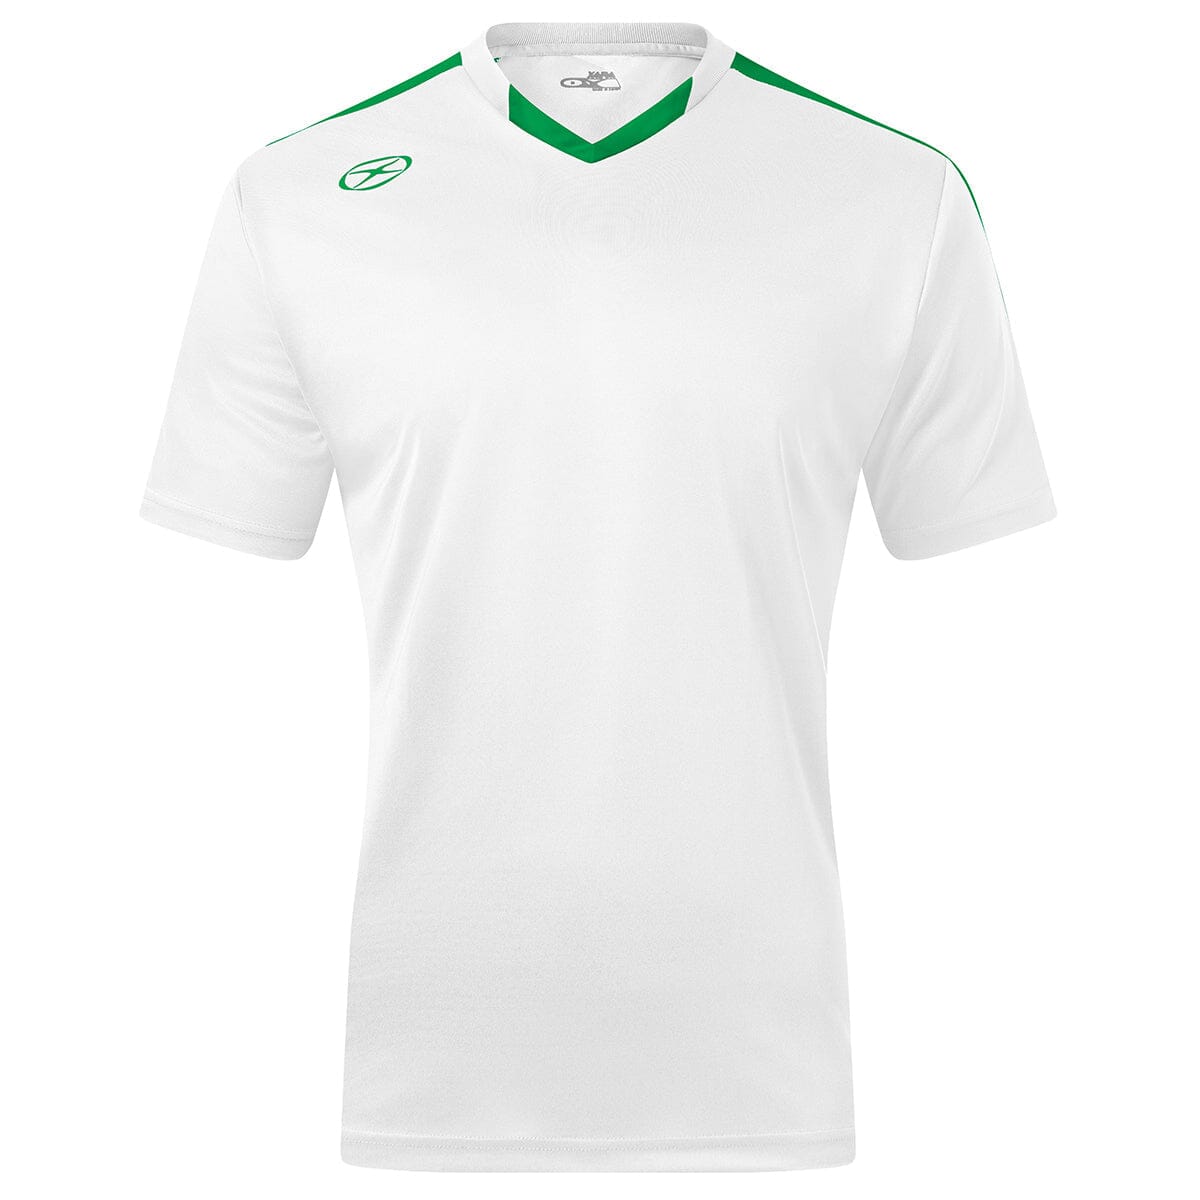 Britannia Jersey - Away Colors - Male Shirt Xara Soccer White/Green Youth Medium 